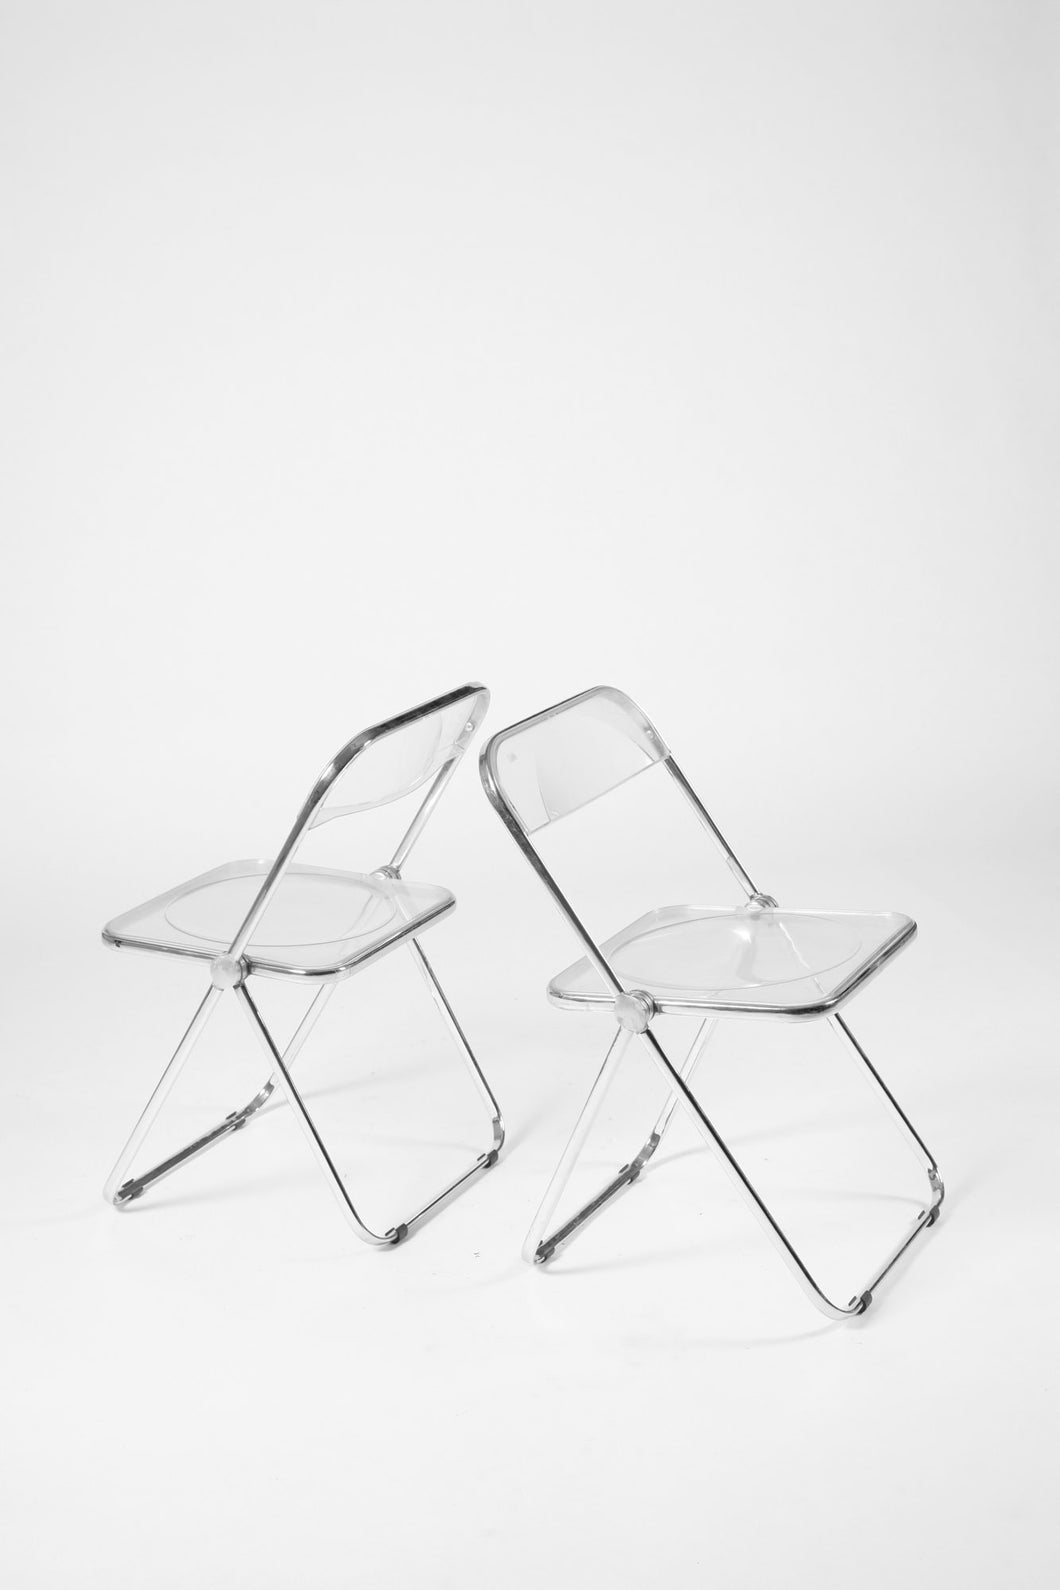 Pair of Giancarlo Piretti Plia Folding Chairs